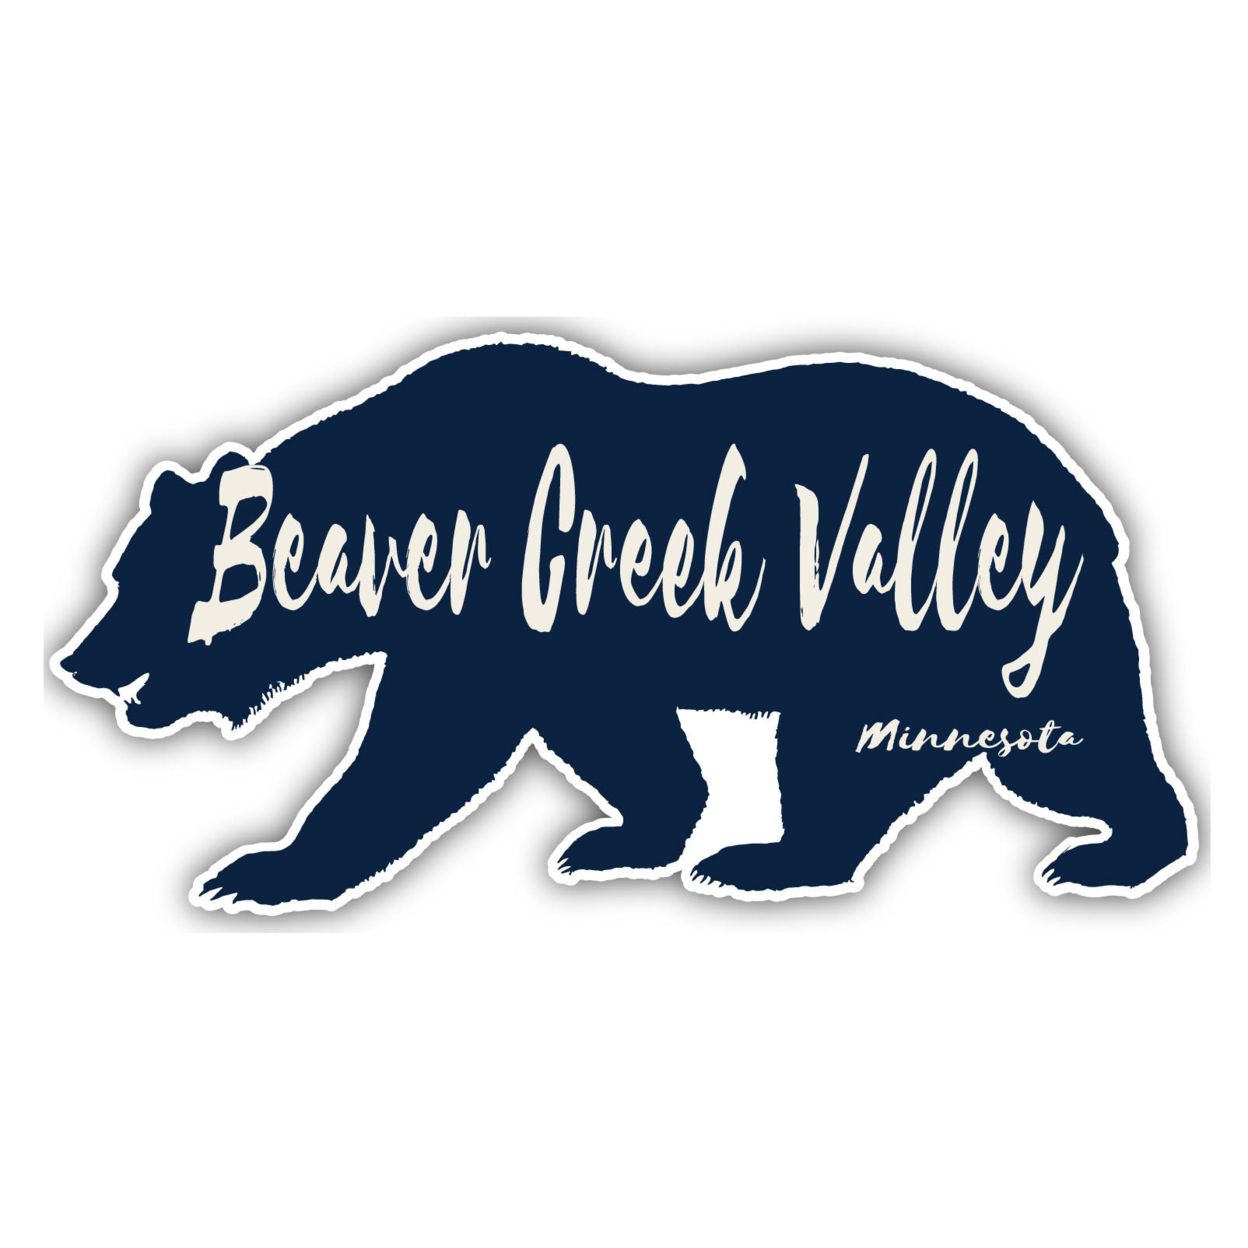 Beaver Creek Valley Minnesota Souvenir Decorative Stickers (Choose Theme And Size) - 4-Pack, 2-Inch, Bear